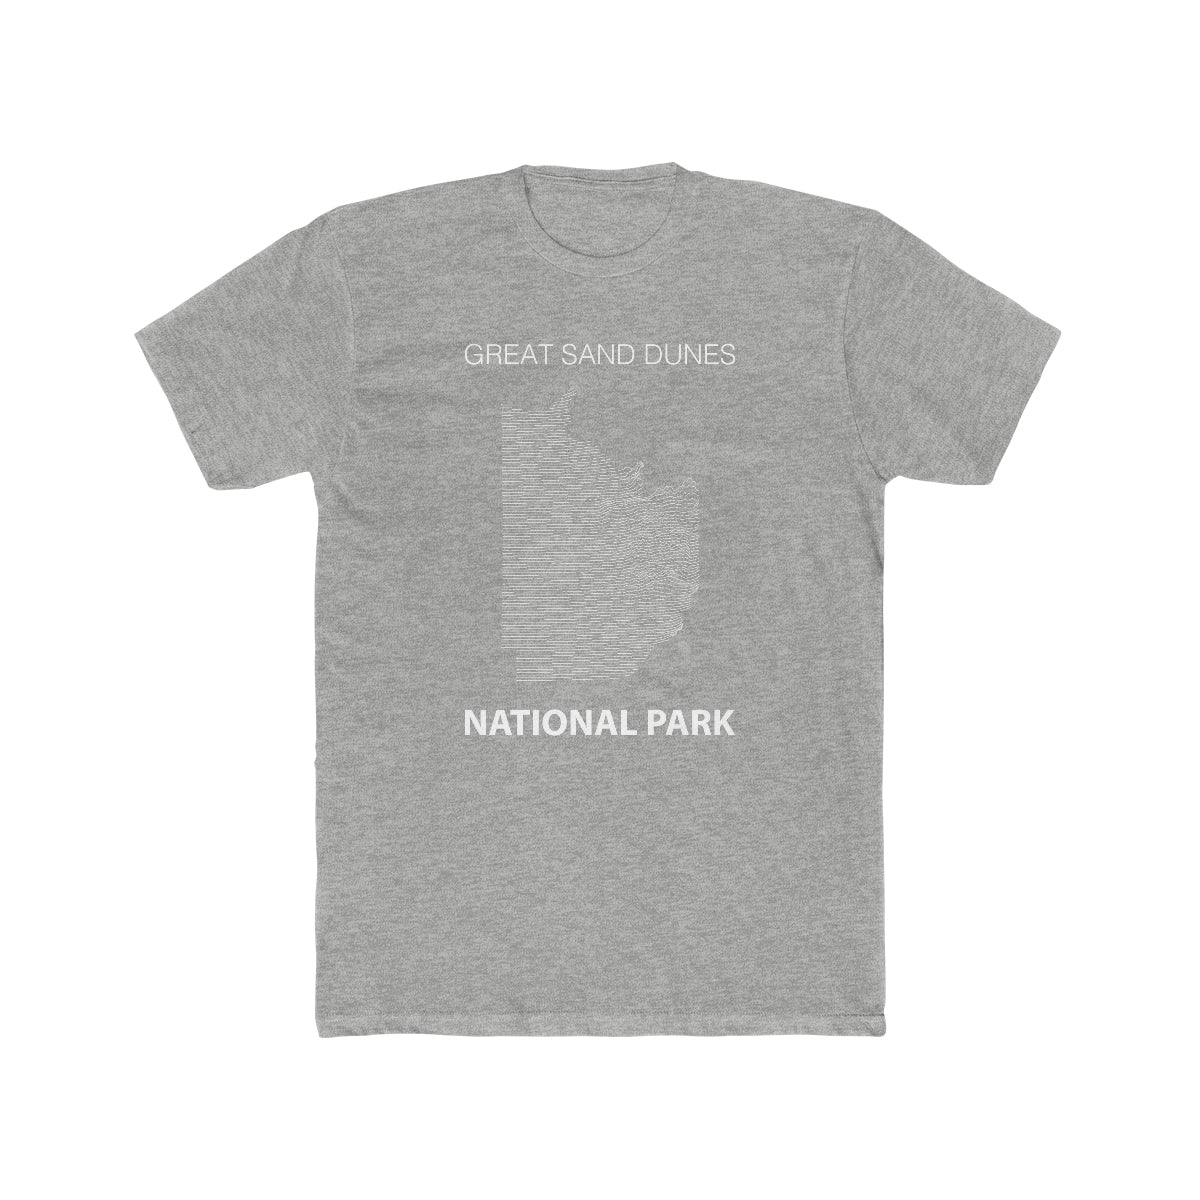 Great Sand Dunes National Park T-Shirt Lines